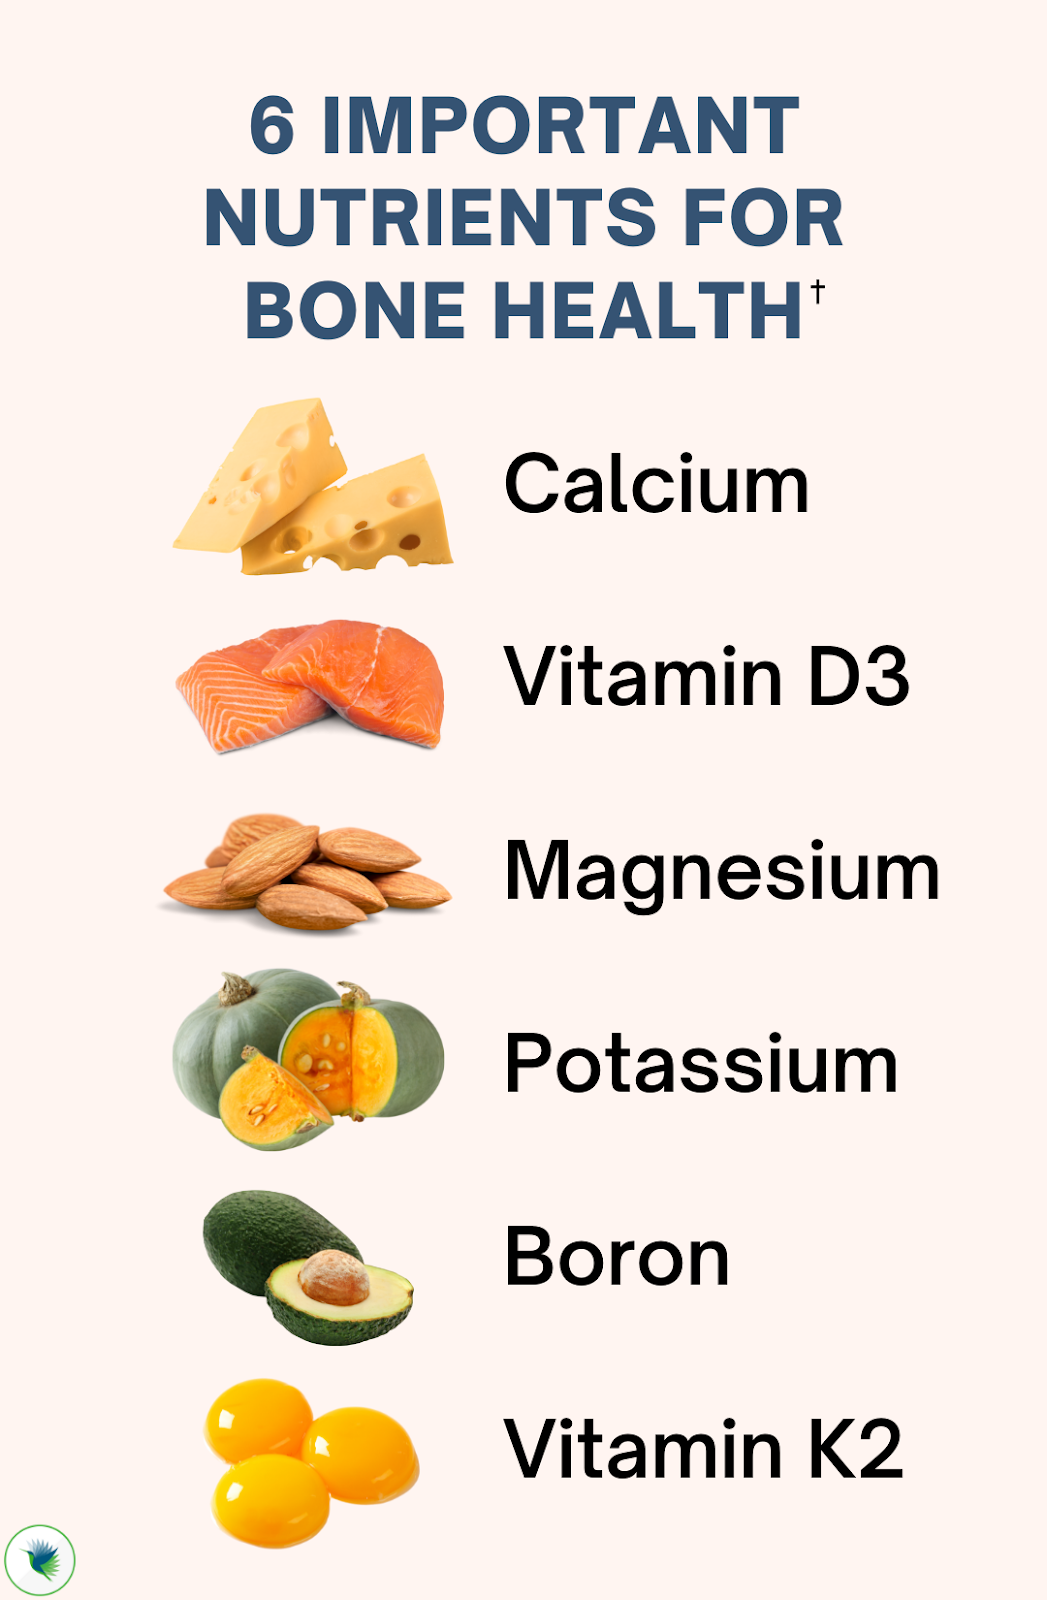 Foods that promote bone health